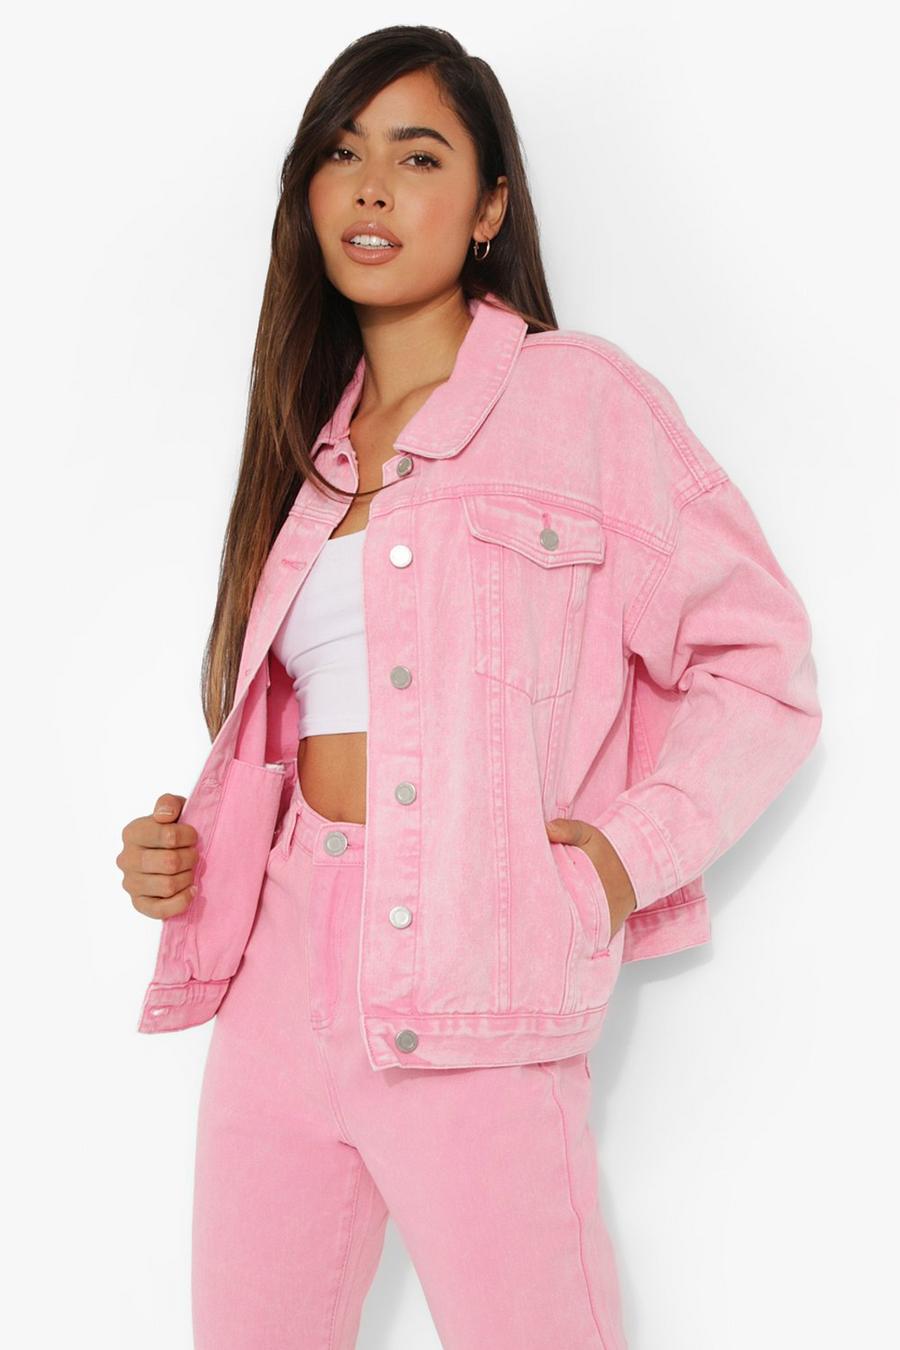 pink denim jacket